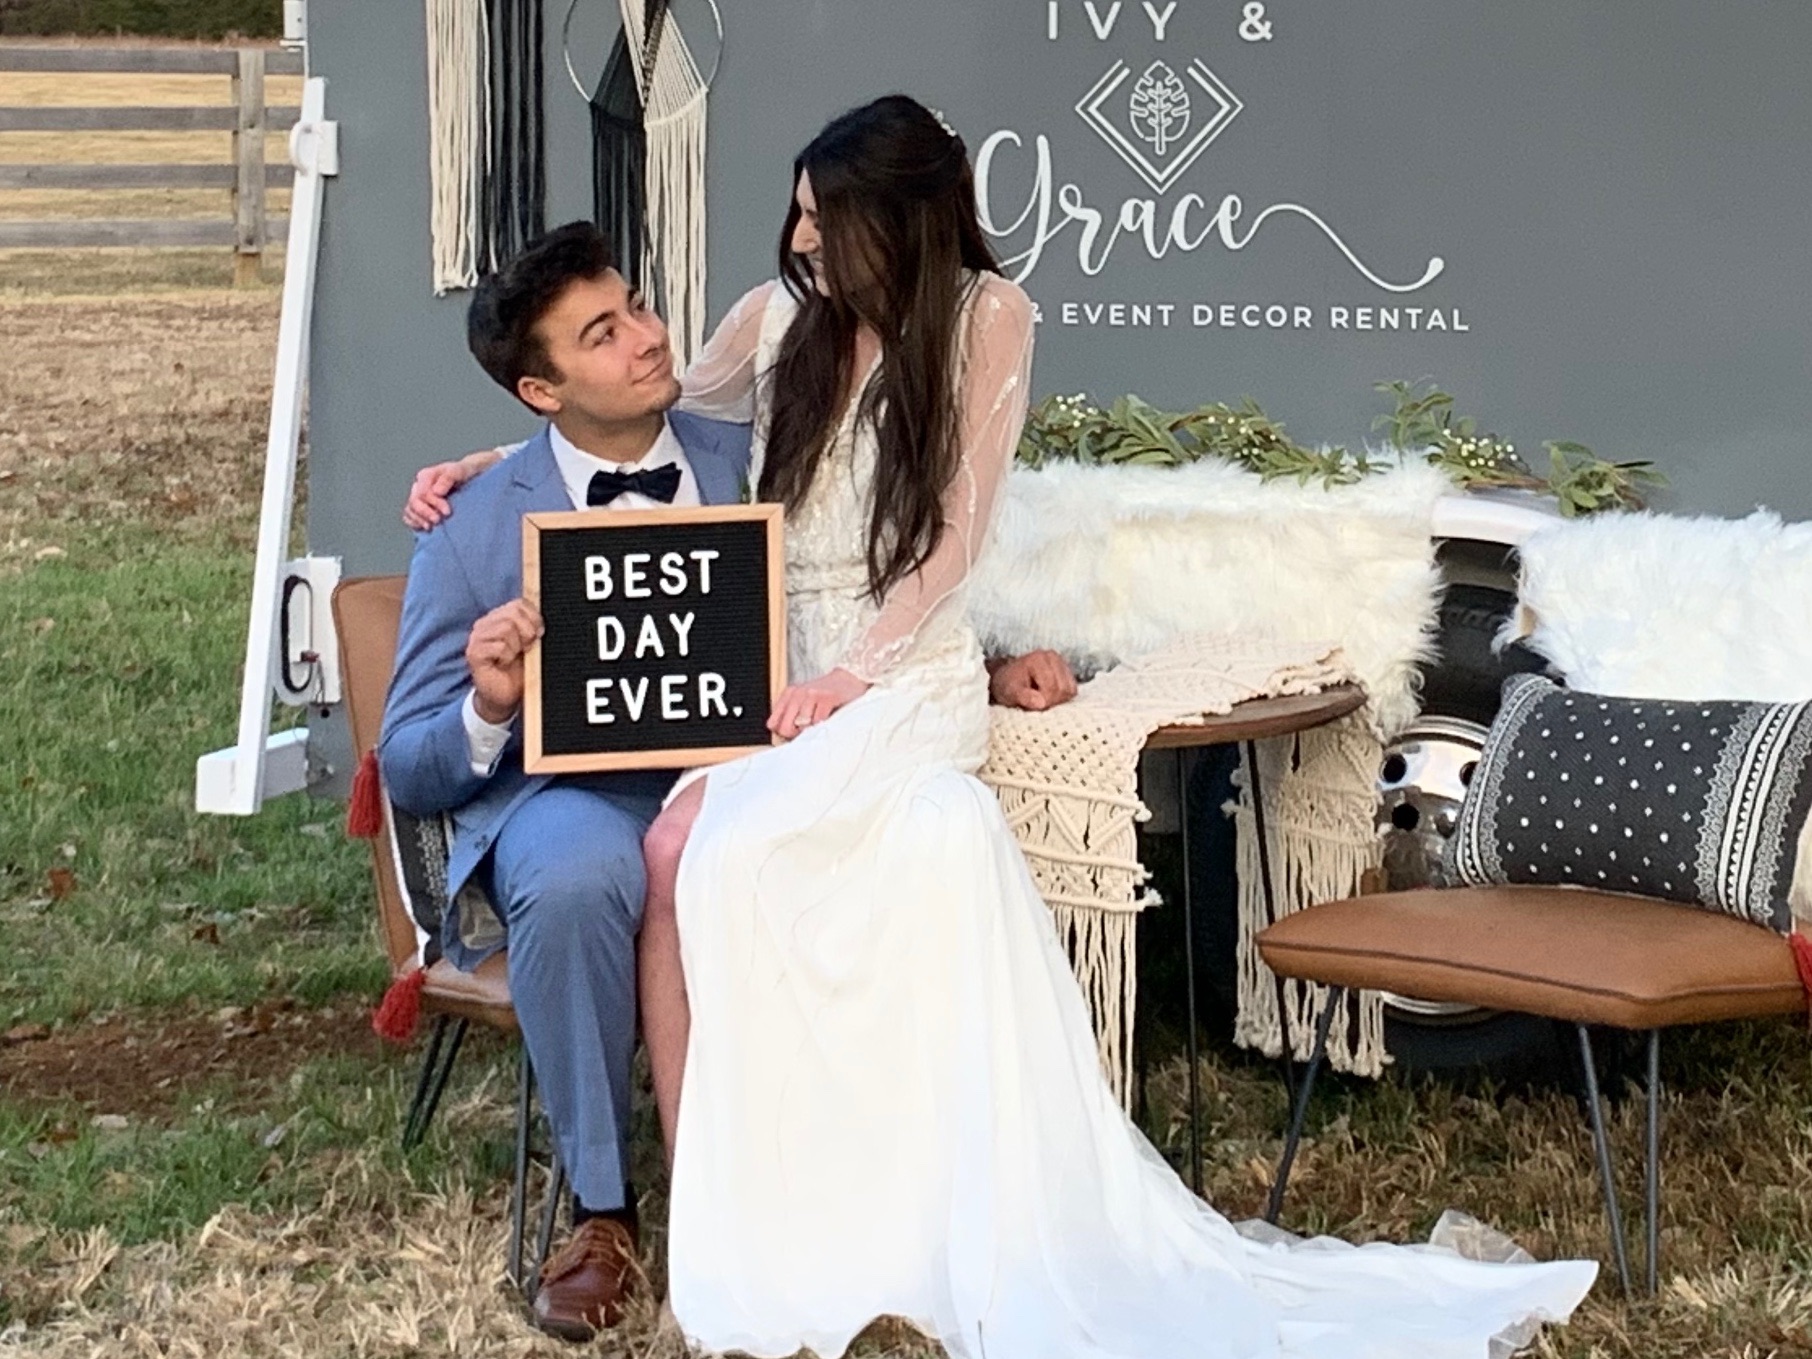 Bringing Beautiful Wedding Visions to Life: Meet Ivy & Grace Decor